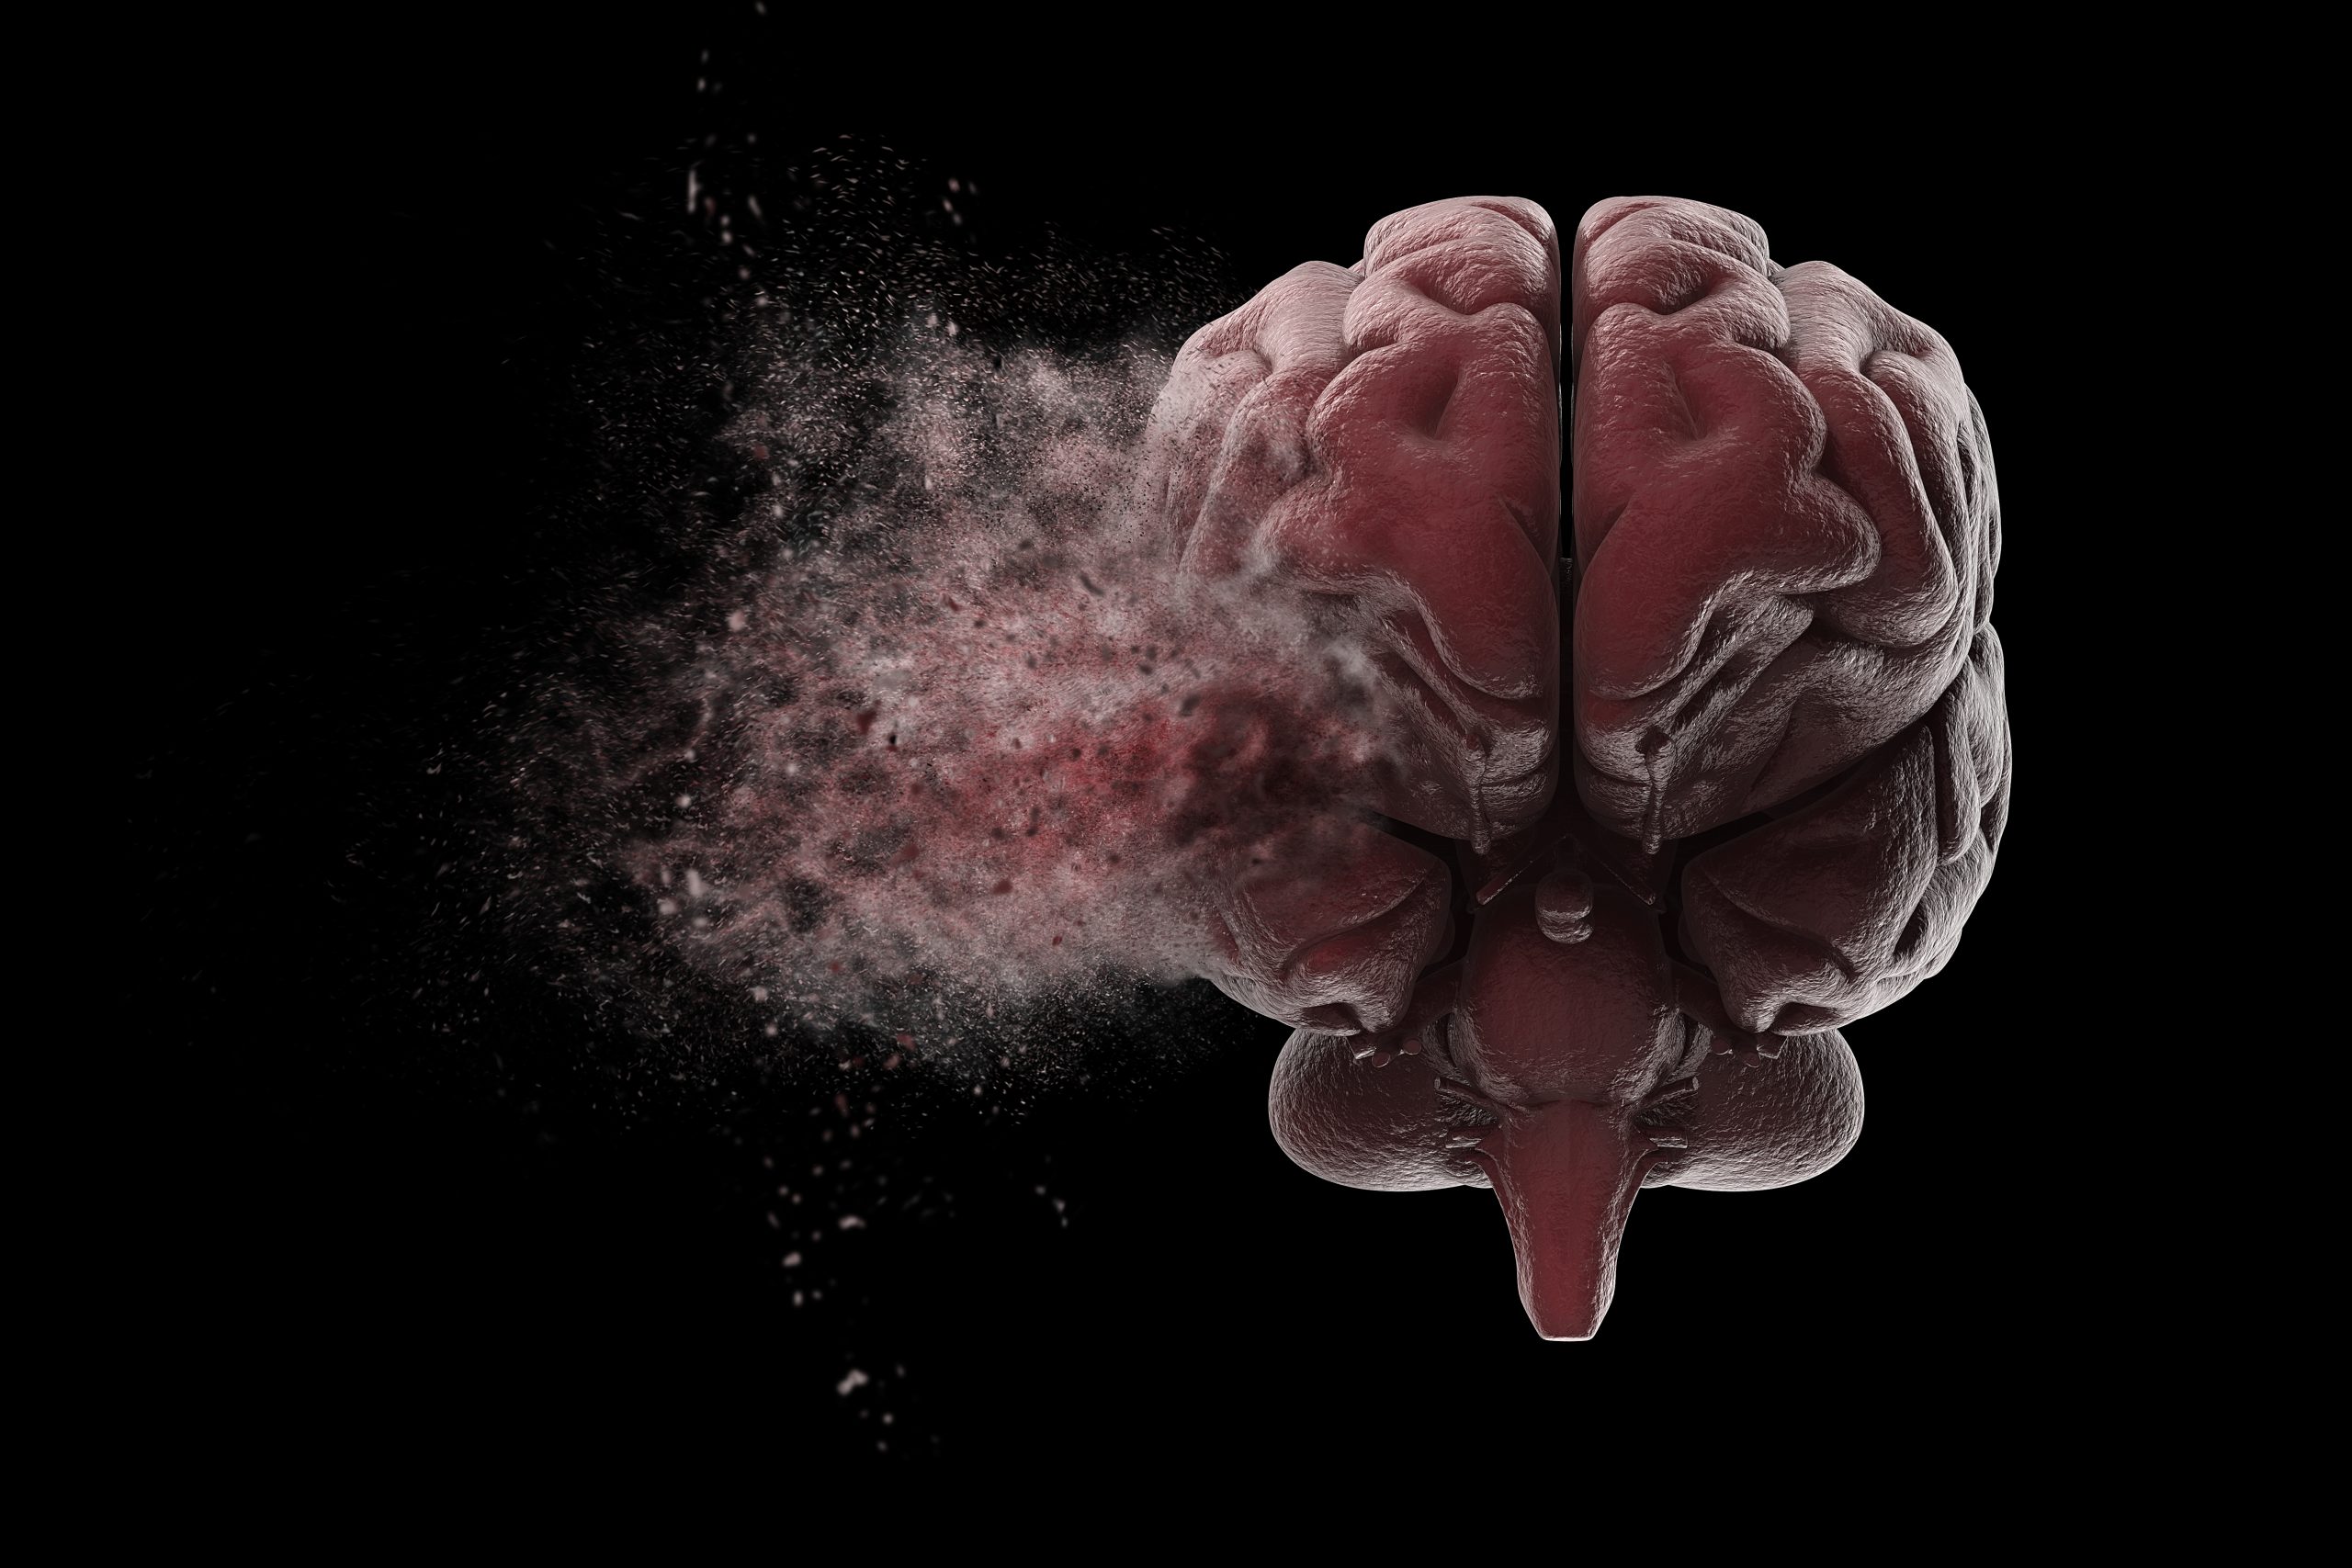 Human brain exploding over black background. 3D illustration